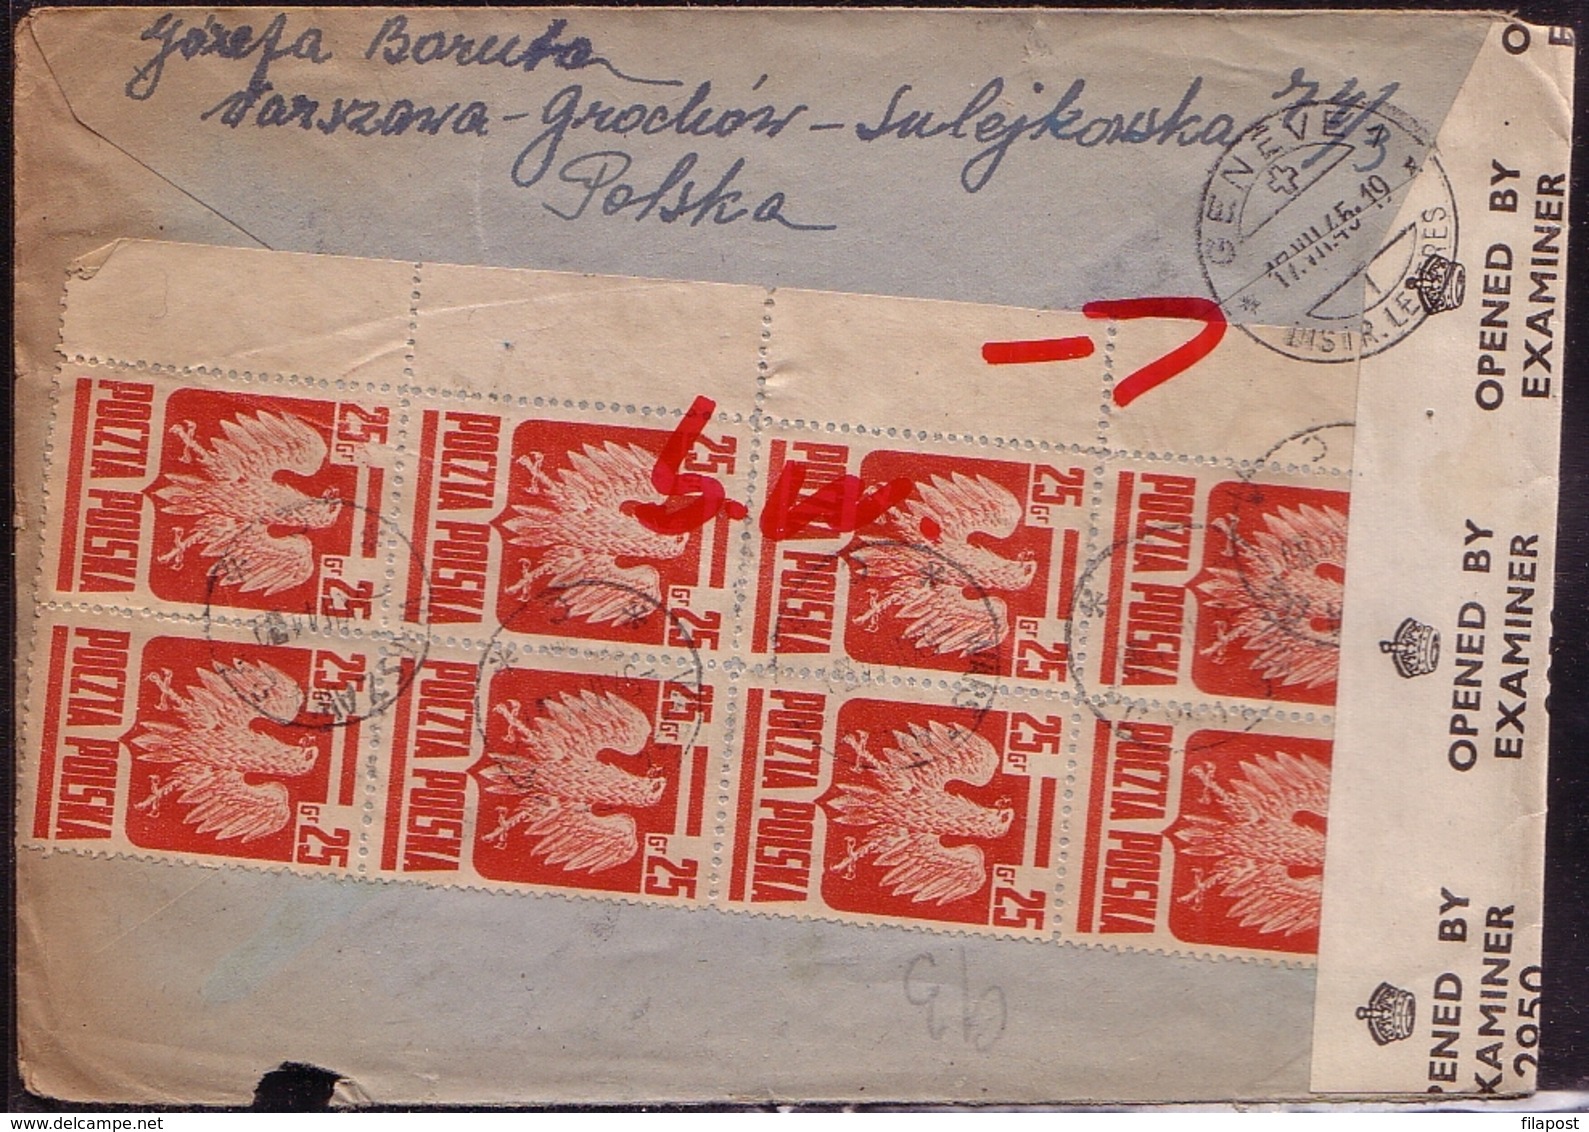 Poland 1944 Red Cross Letter From Poland To Geneva. Registered Letter Warsaw 16, Censor 5, XII. 1944, Stamps 383 - 8 V. - Vignetten Van De Bevrijding